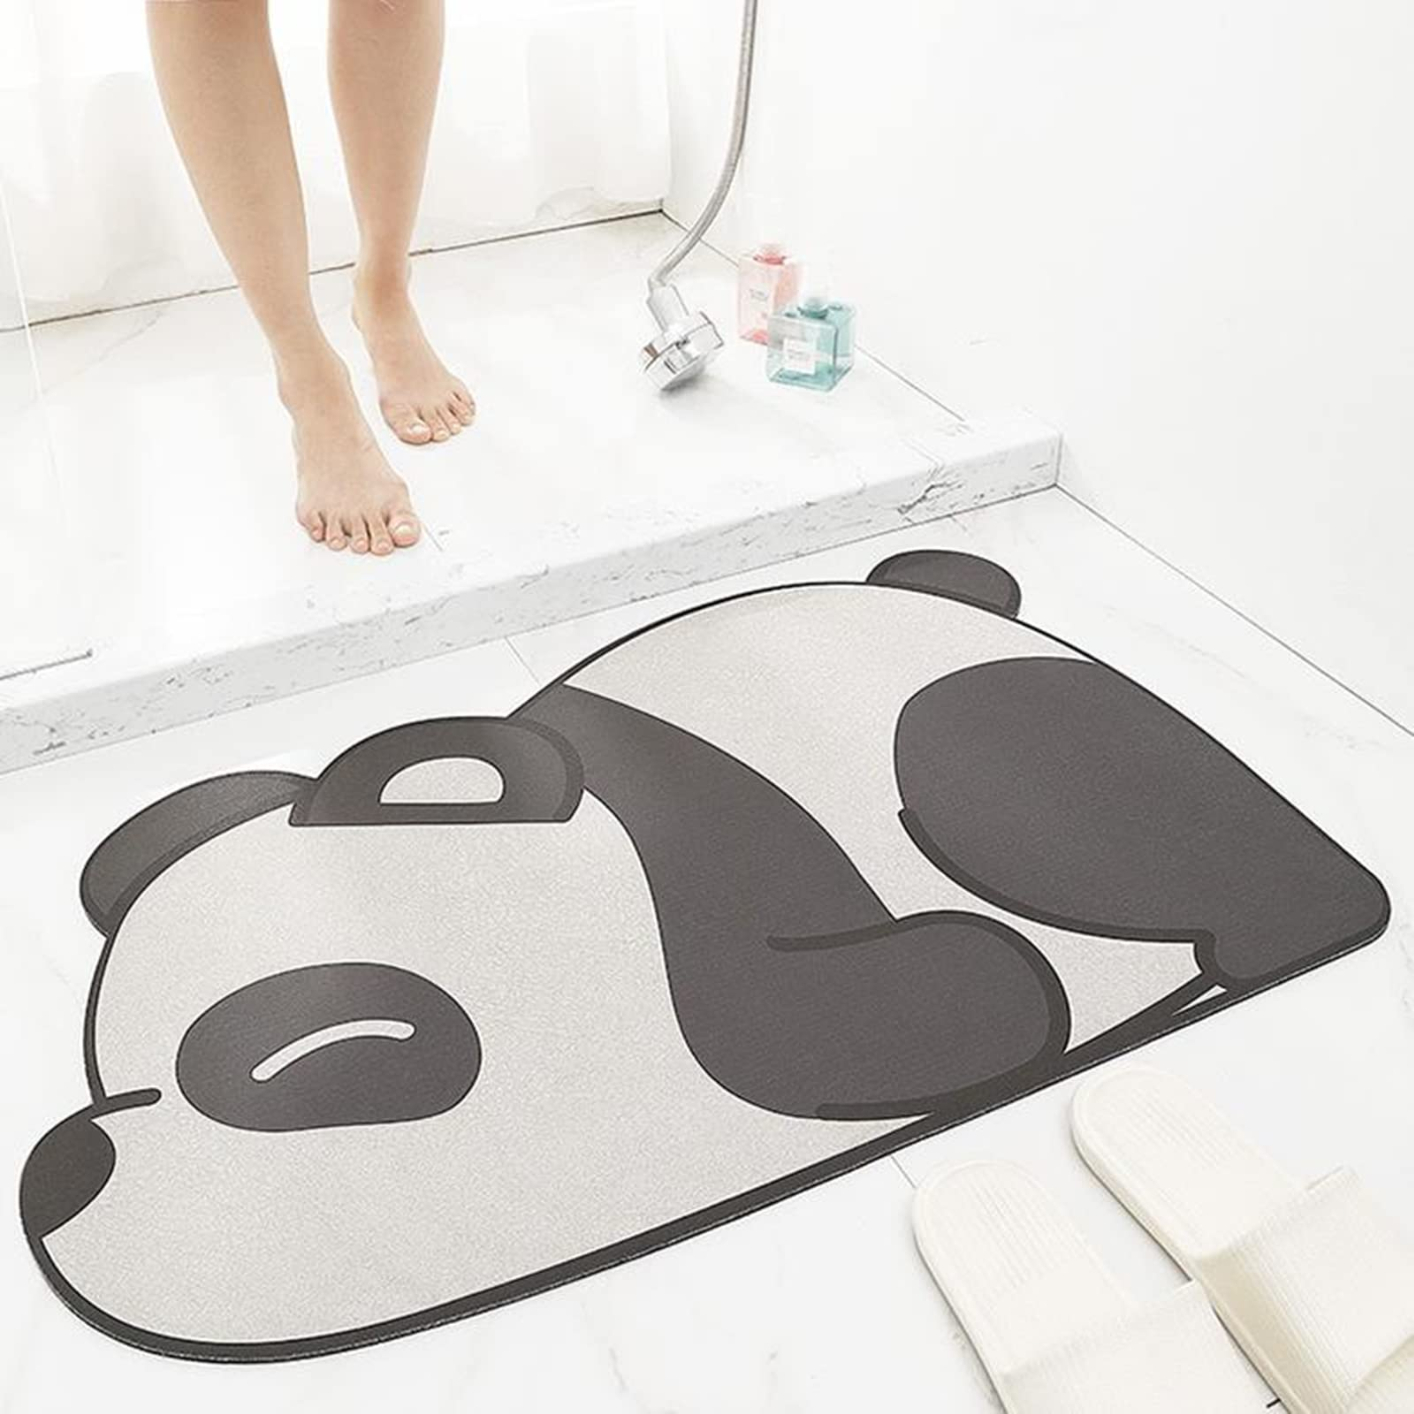 DZ-560 Bath Floor Mat Animal Cat Panda Cute Fun Cartoon Rug Absorbent Non-Slip for Bathroom Kitchen Bedroom Entrance Floor Mat